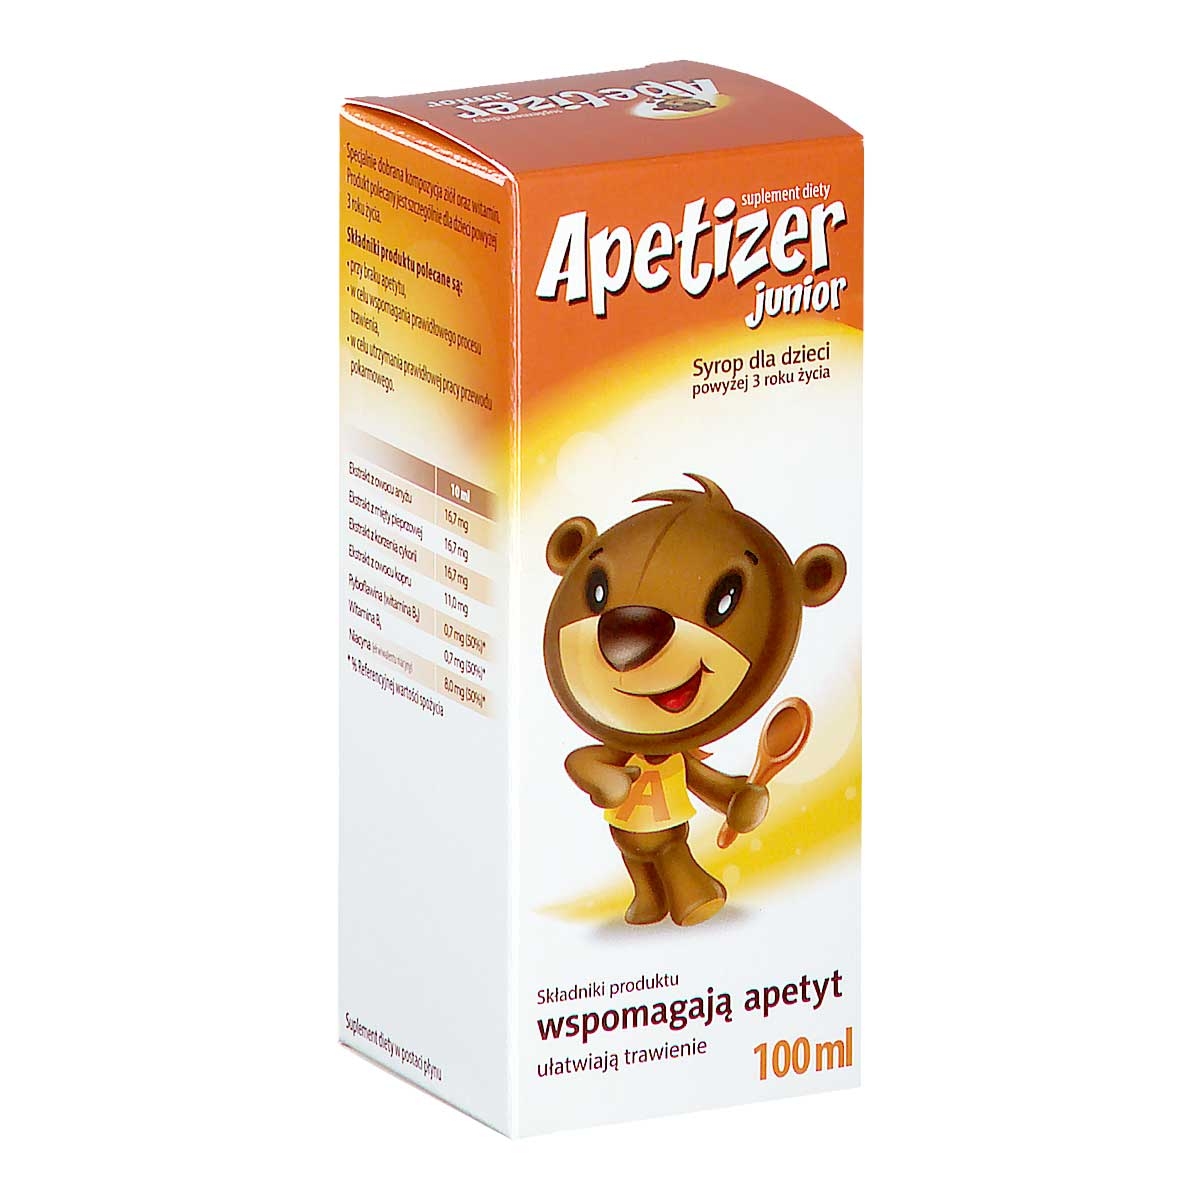 apetizer (junior) syrop dla dzieci 100 ml